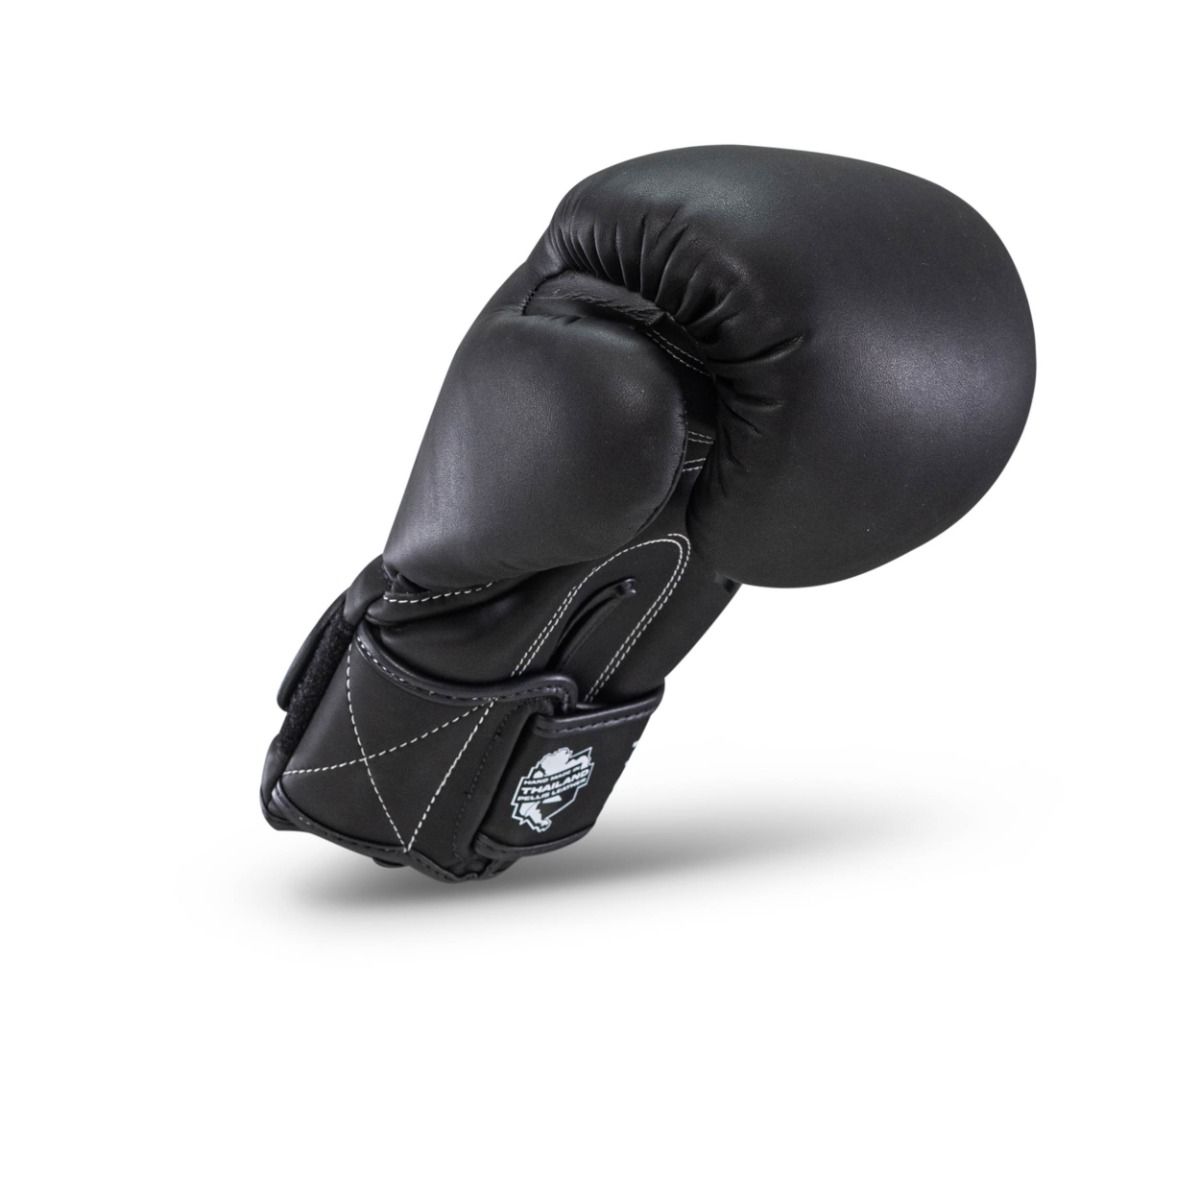 Buy LVL UP Boxing Gloves BG2 Online ✓ - emparor Fight Shop